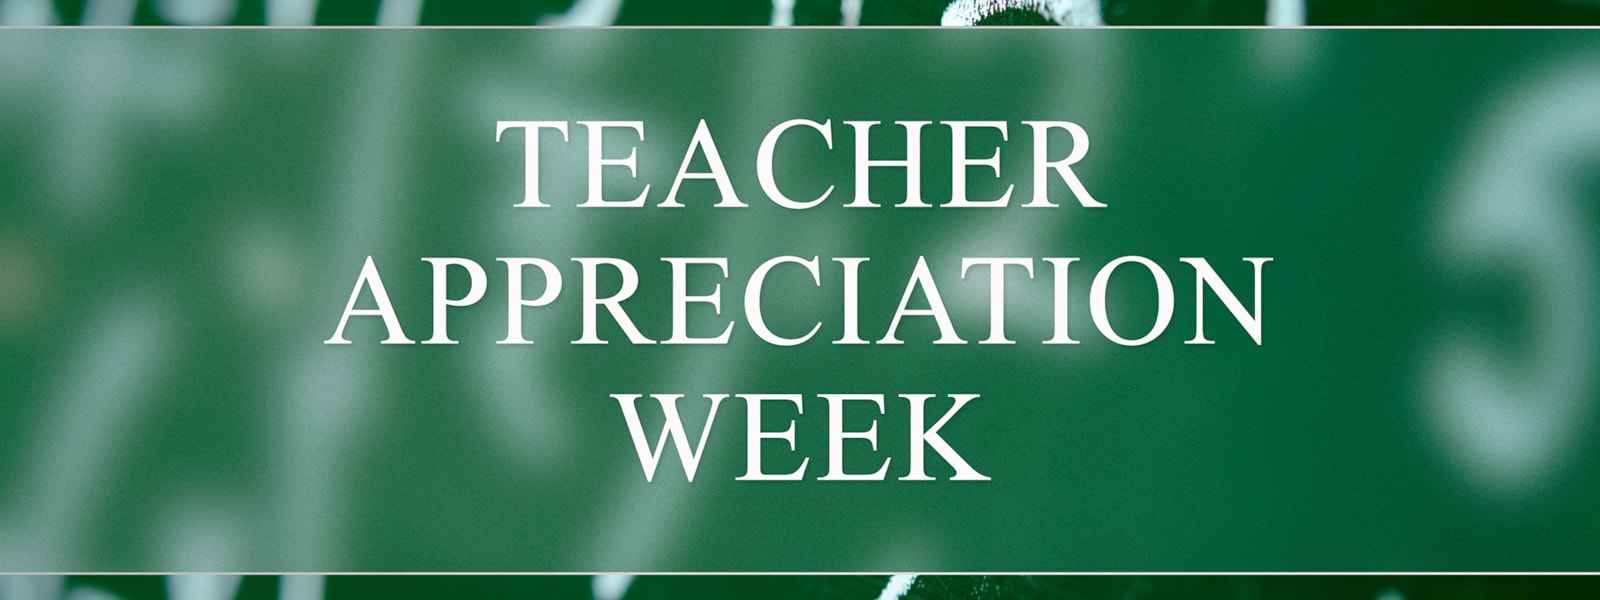 Teacher appreciation week words